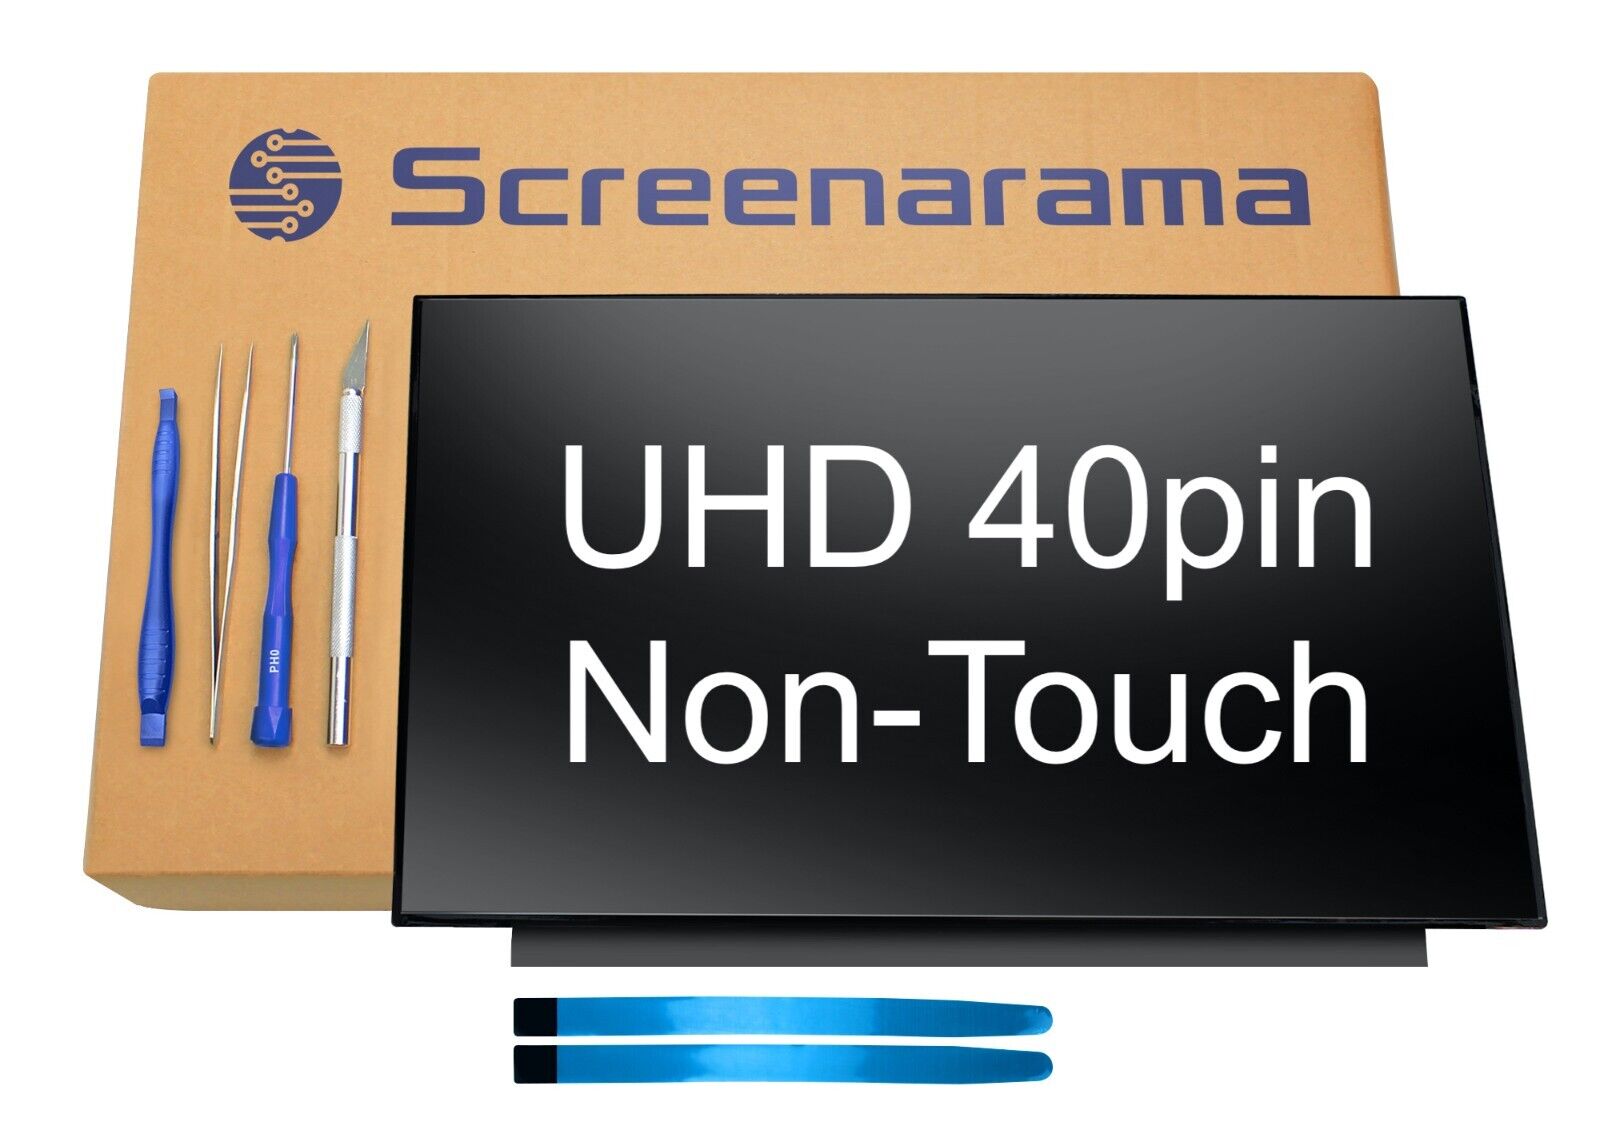 Lenovo FRU 01YN138 PN SD10Q66917 UHD 40pin LCD Screen + Tools SCREENARAMA * FAST